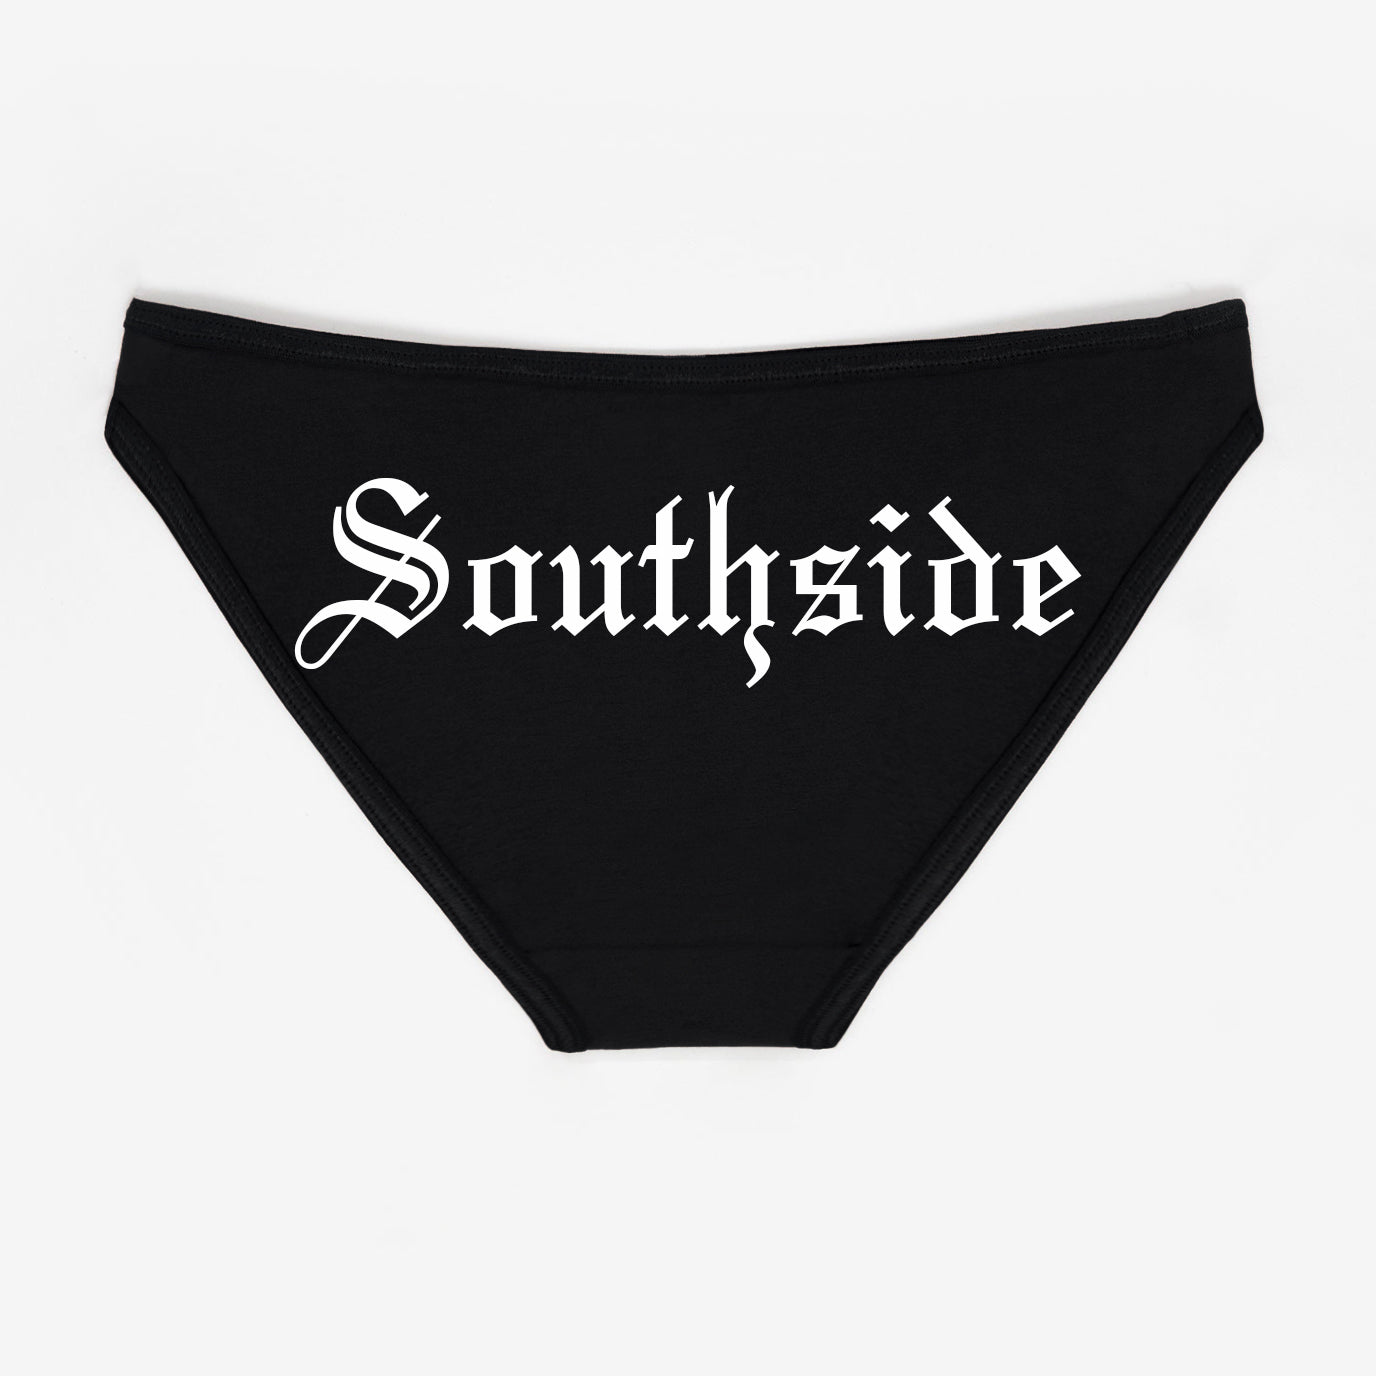 Southside Black and White Panties - Rally Panties